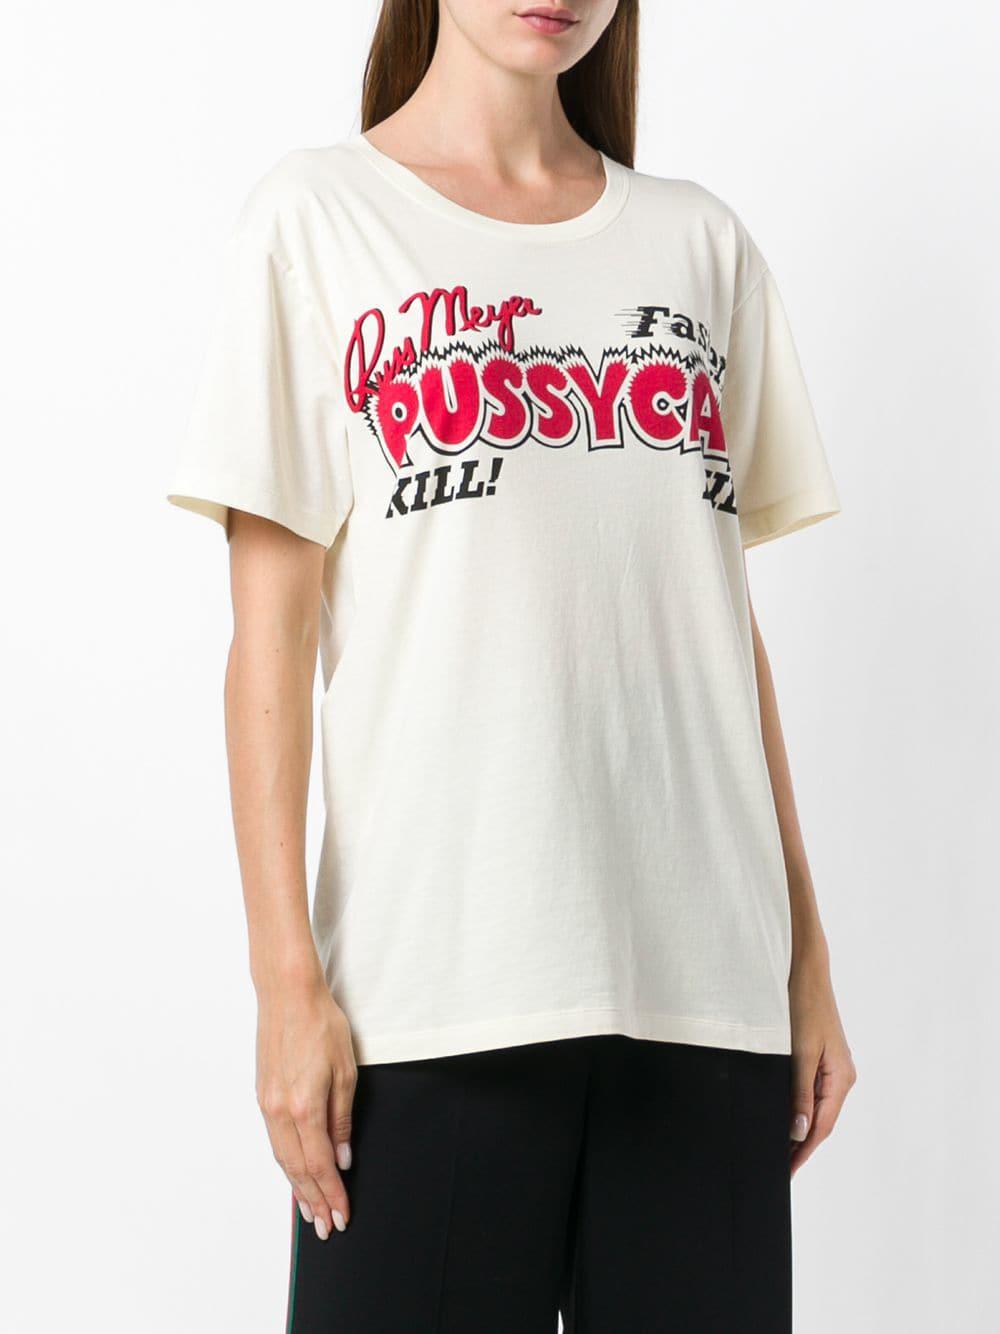 Gucci Pussycat T-shirt | Lyst